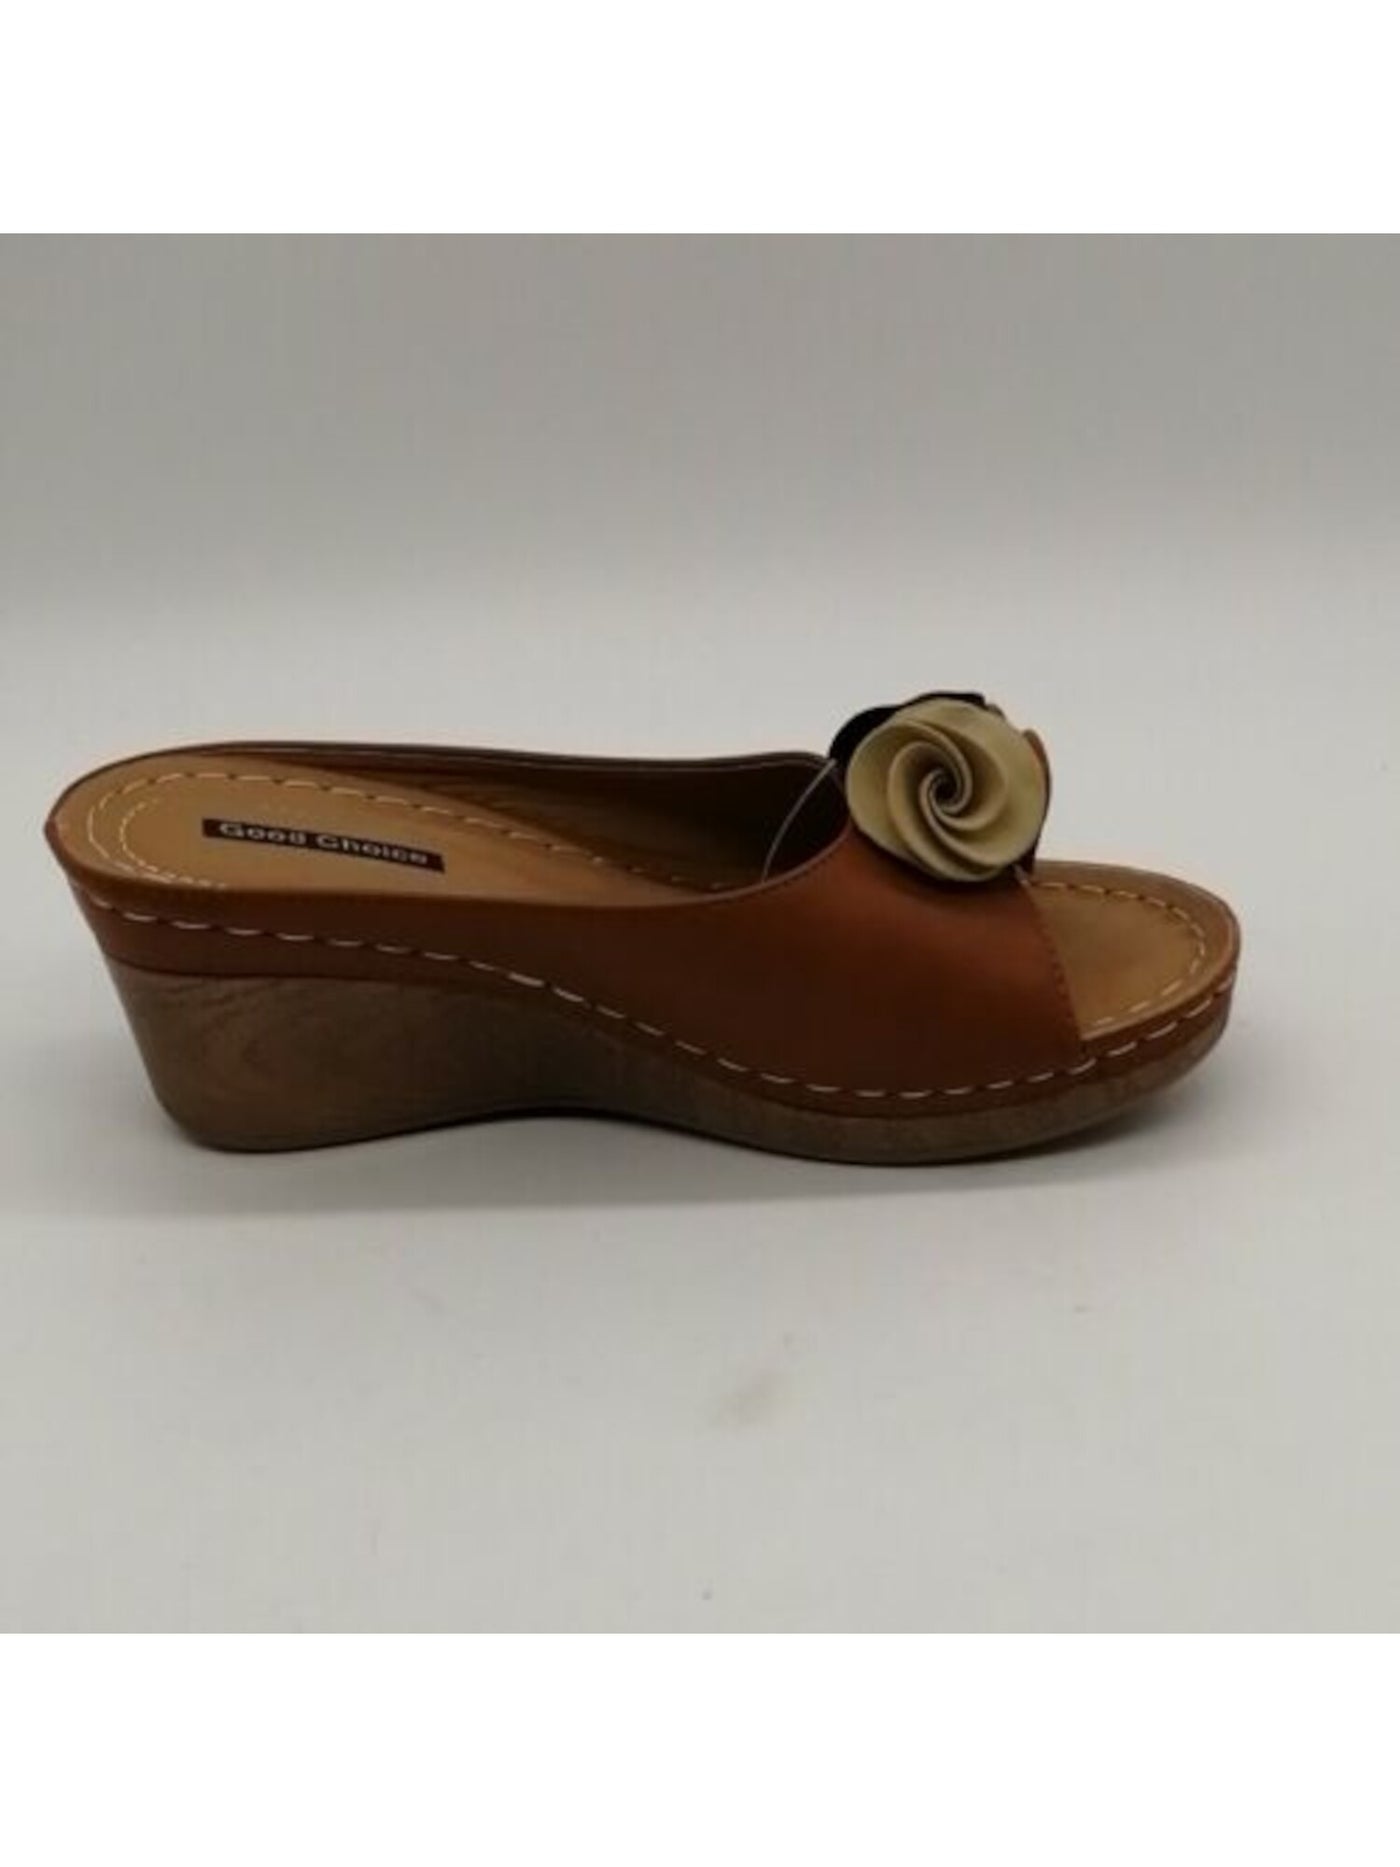 GOOD CHOICE Womens Brown 0.5" Platform Flower Detail Cushioned Comfort Sydney Round Toe Wedge Slip On Slide Sandals Shoes 7